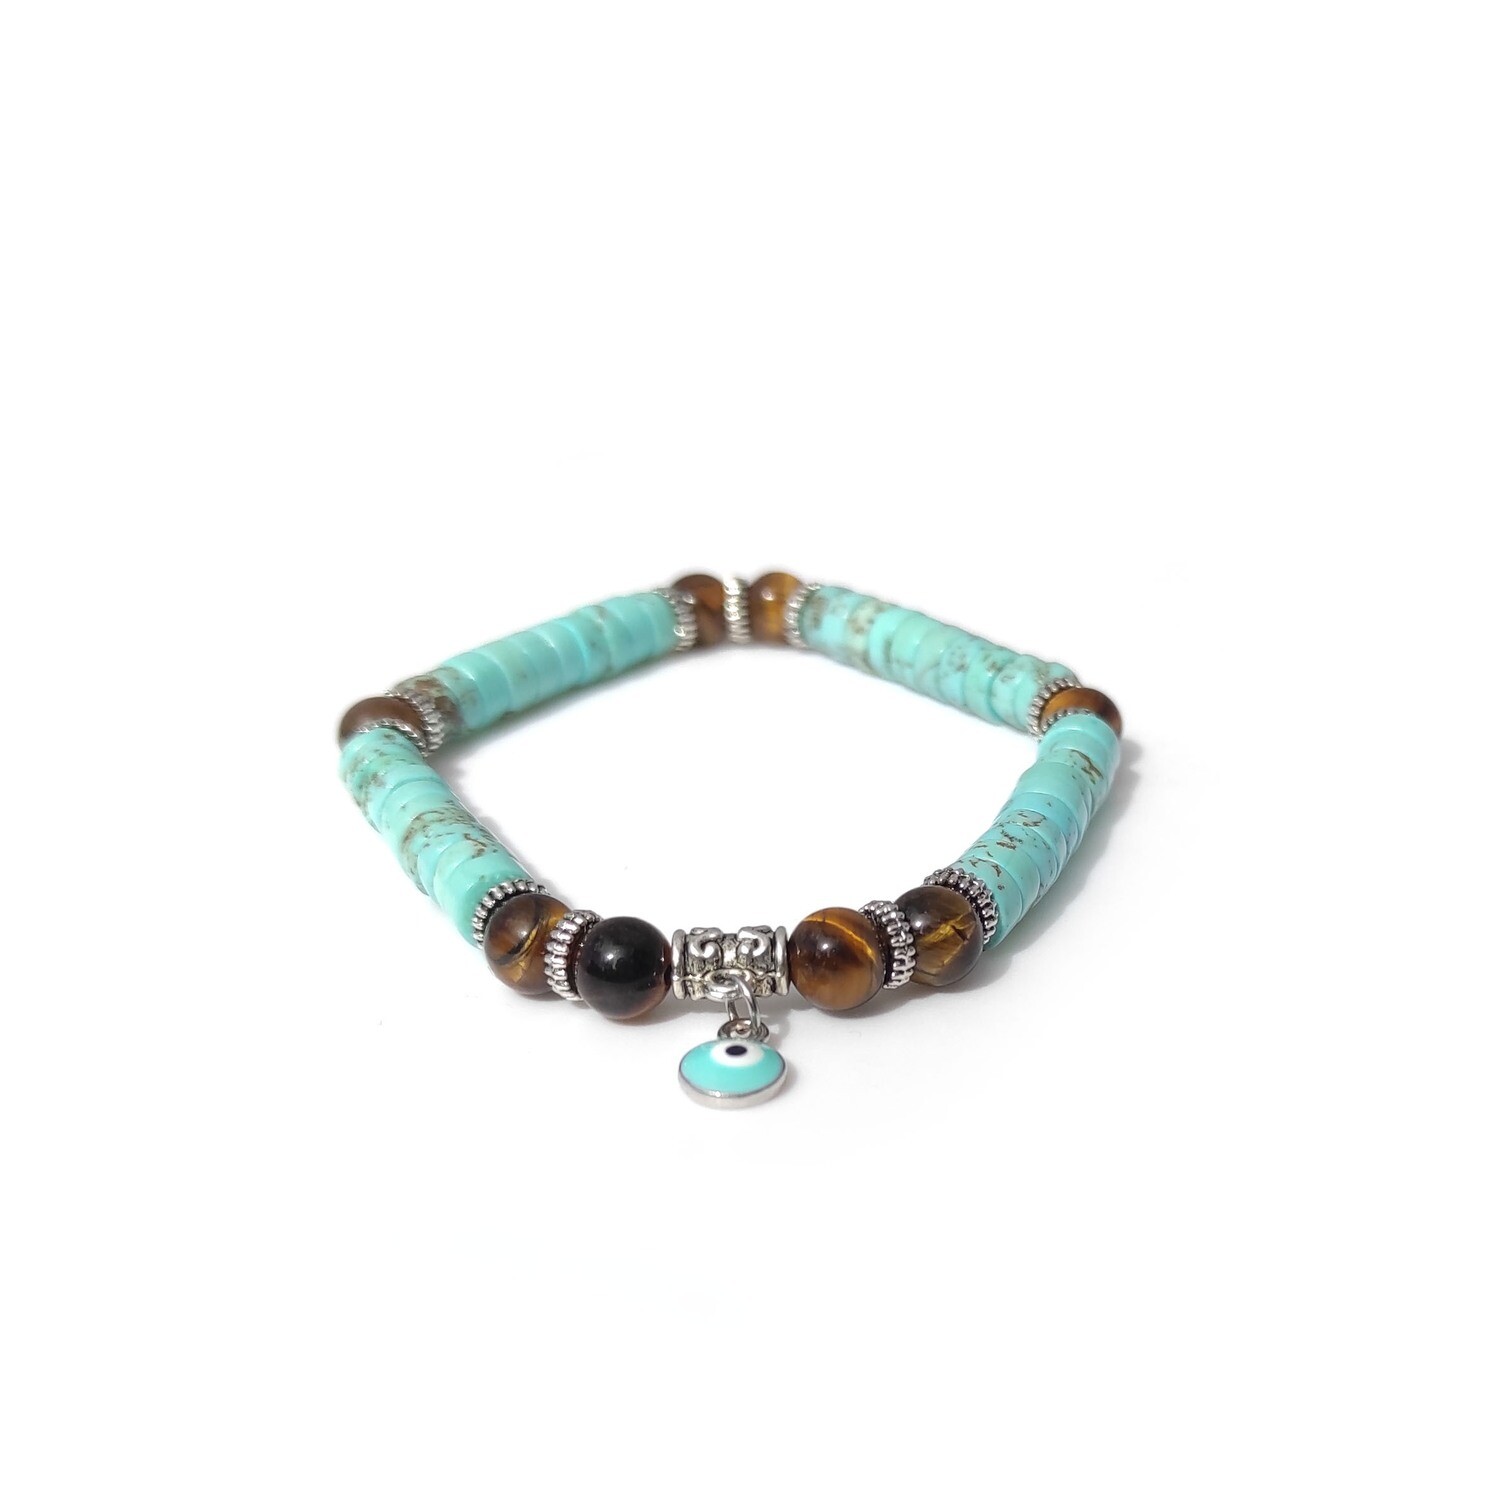 Turquoise and Tigers Eye gemstone with Evil eye bracelet